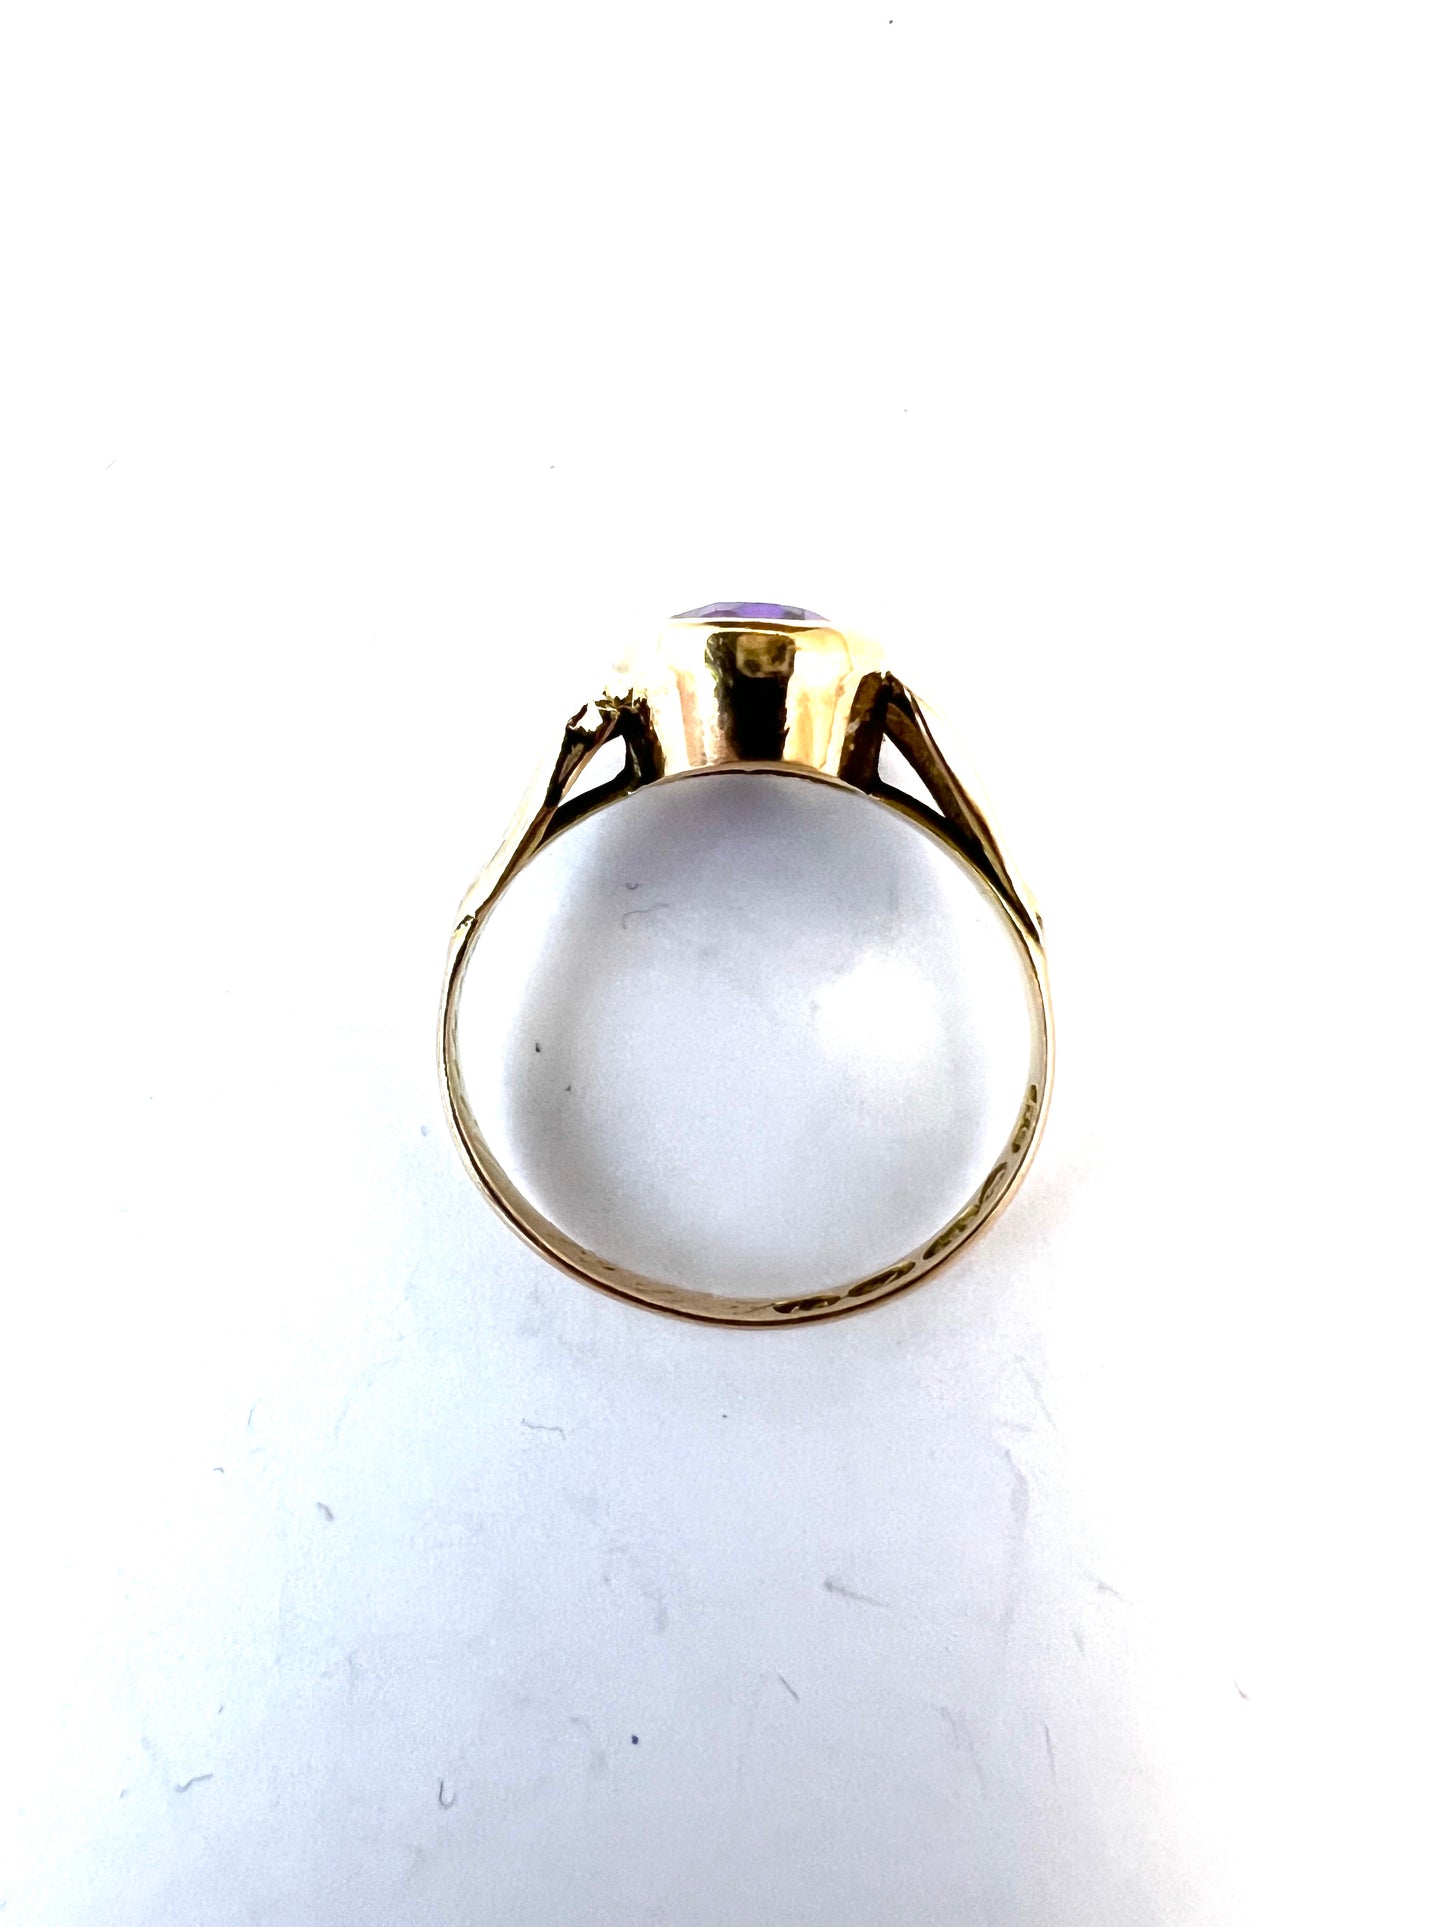 Raul Grönlund, Finland 1959. Vintage 14k Gold Amethyst Ring.